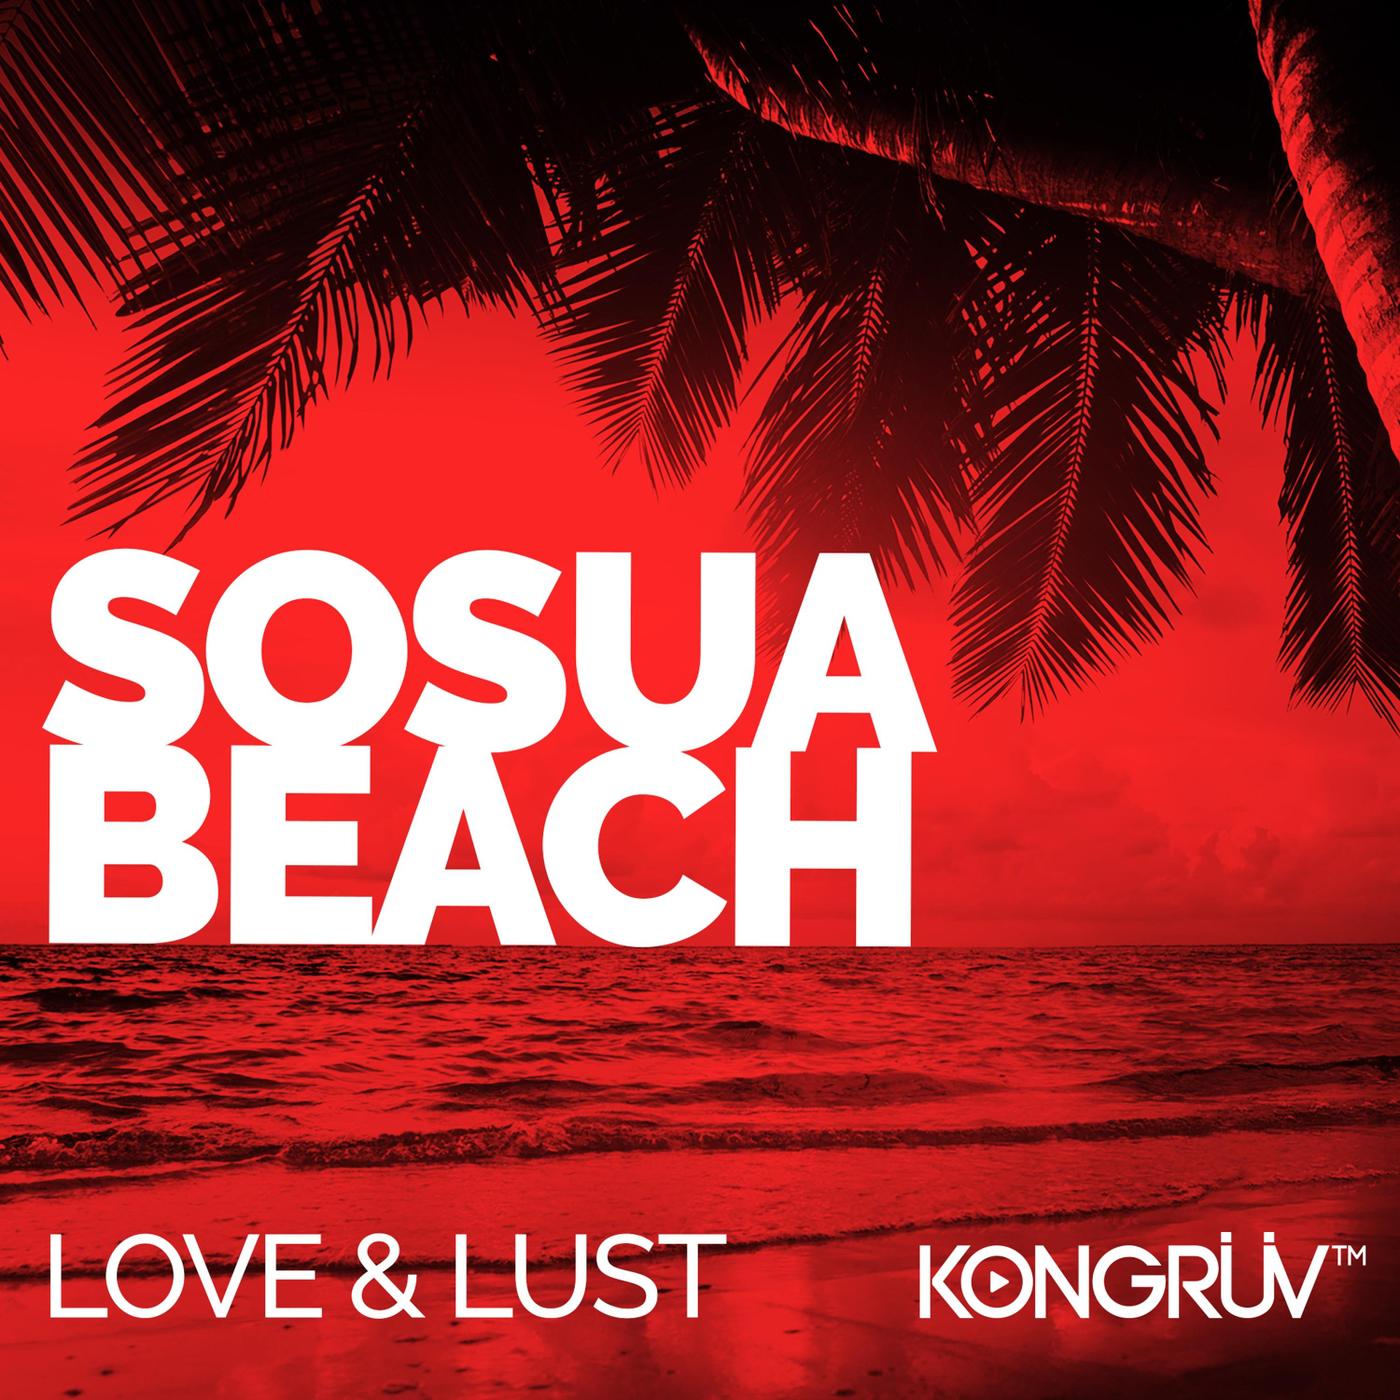 Dominicanada Show Band. 播 放 收 藏 分 享 下 载. Sosua Beach Love & Lust. 歌 手. ...